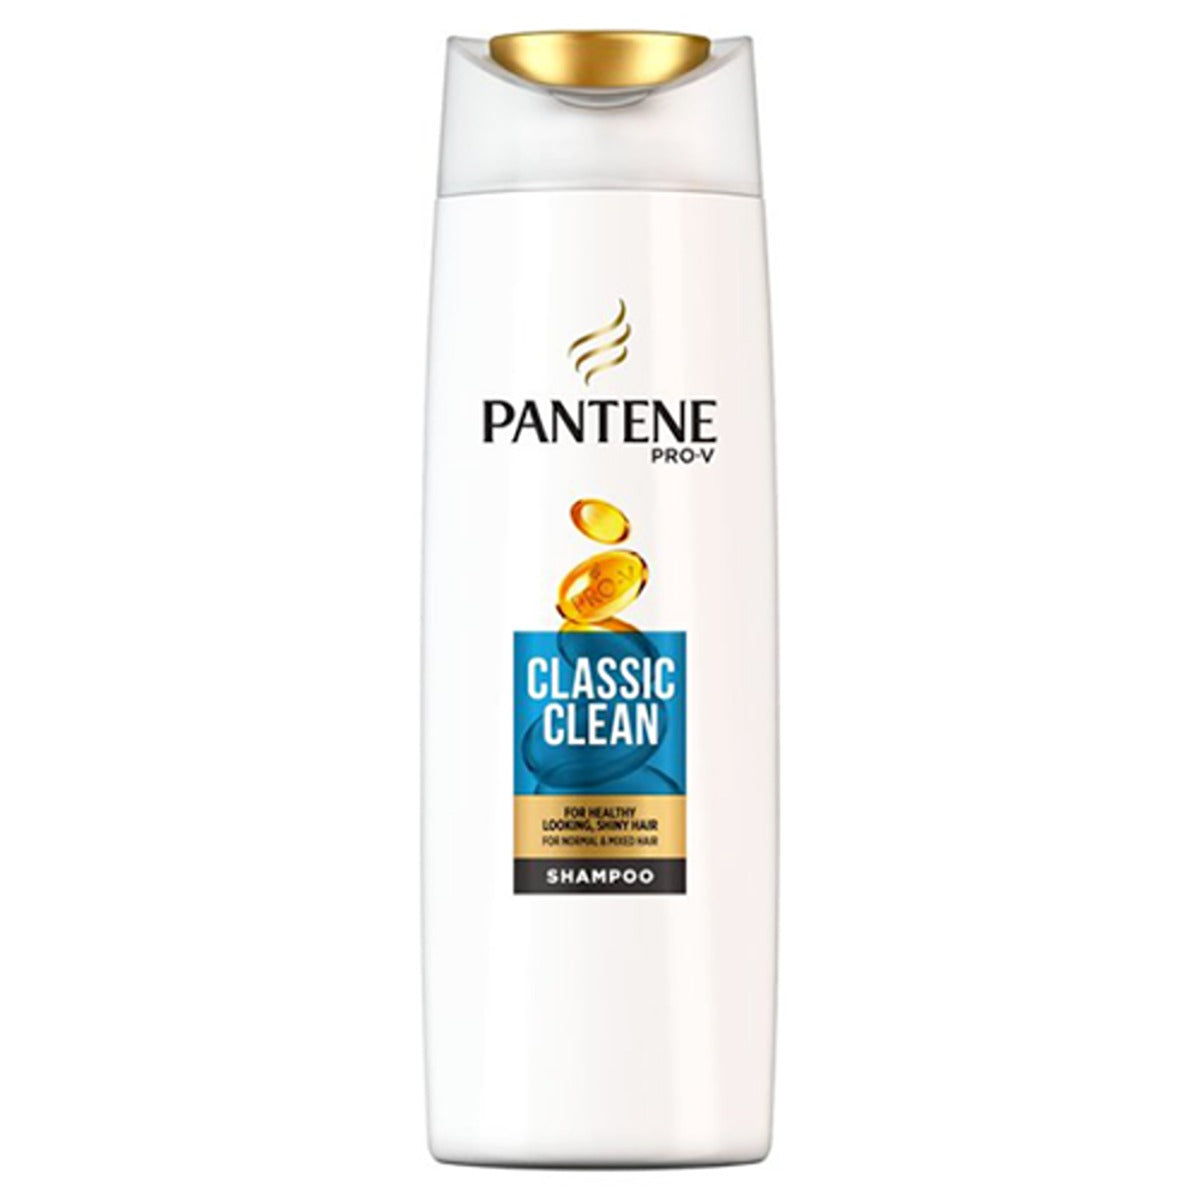 Pantene - Classic Clean Shampoo 360ml - Continental Food Store